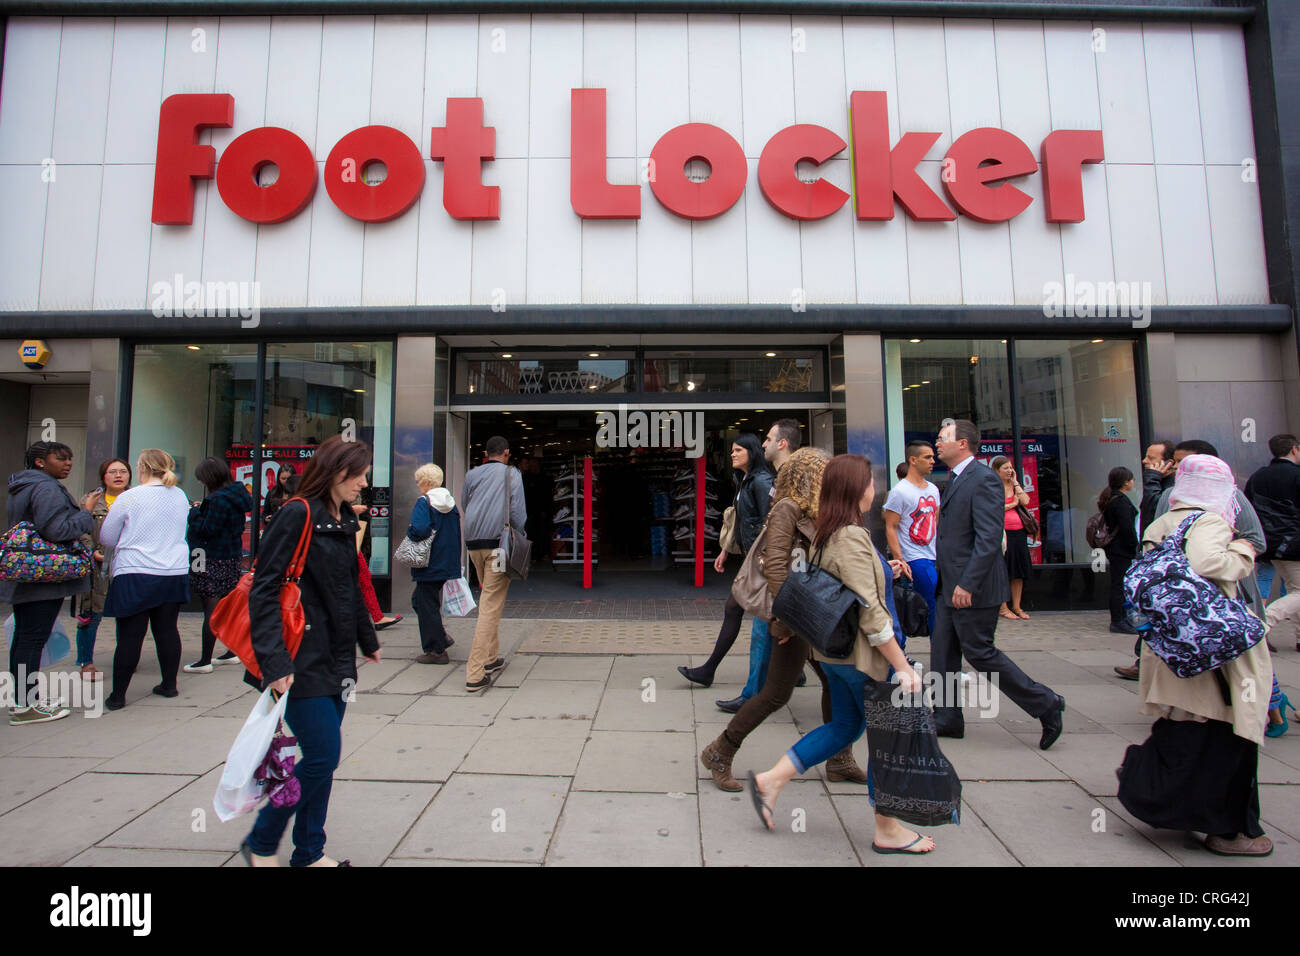 Foot Locker shoe and sportswear retailer, Oxford Street, London, United Kingdom Stock Photo